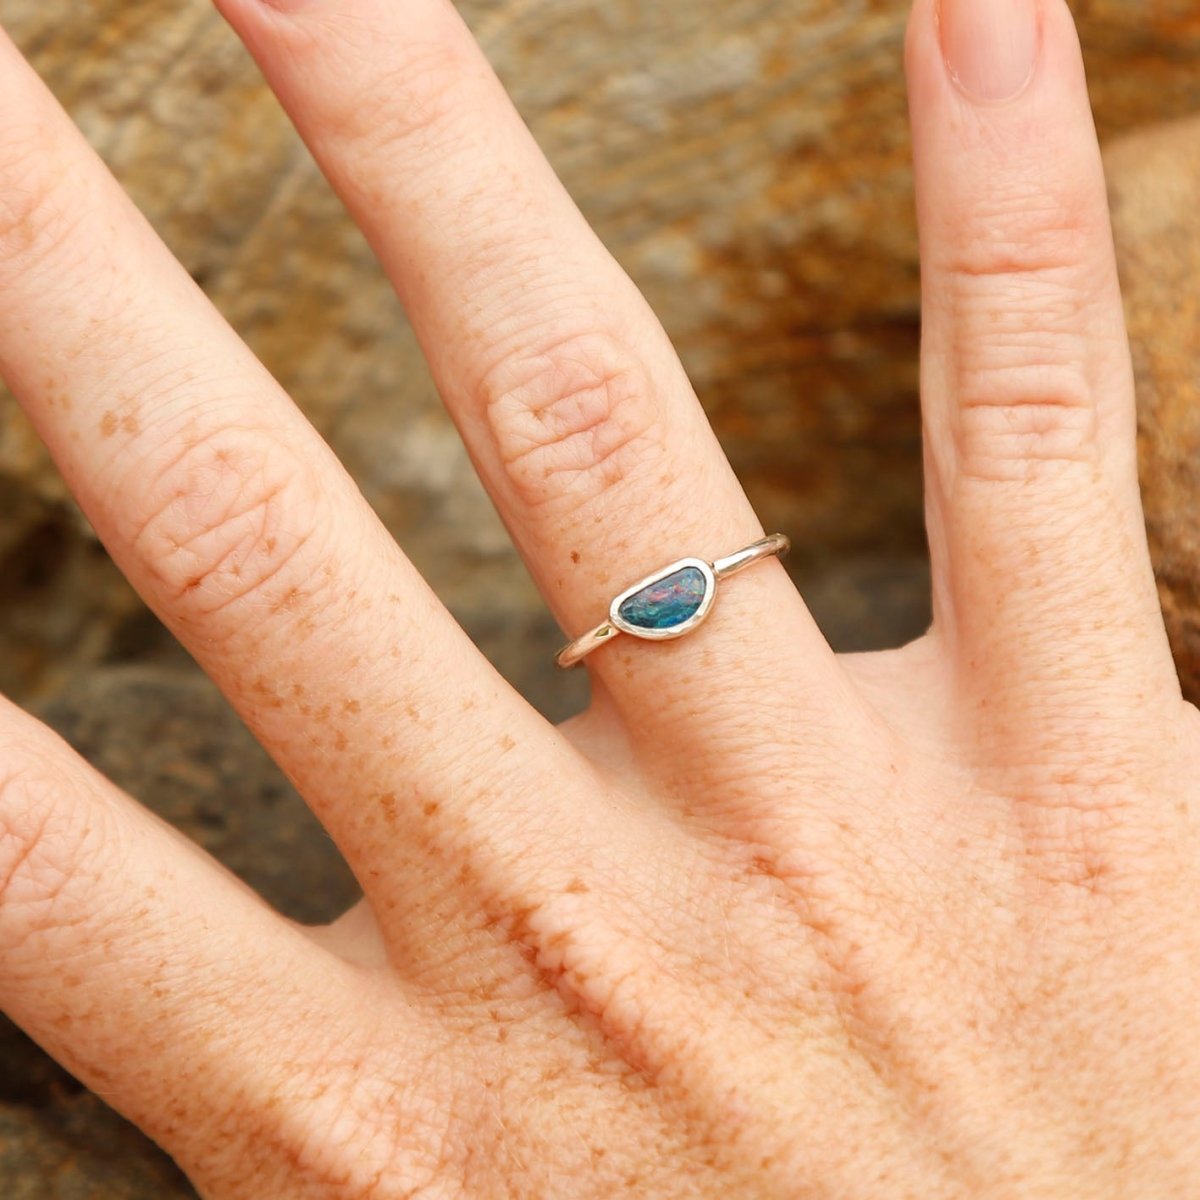 wearing a handmade Opal Ring